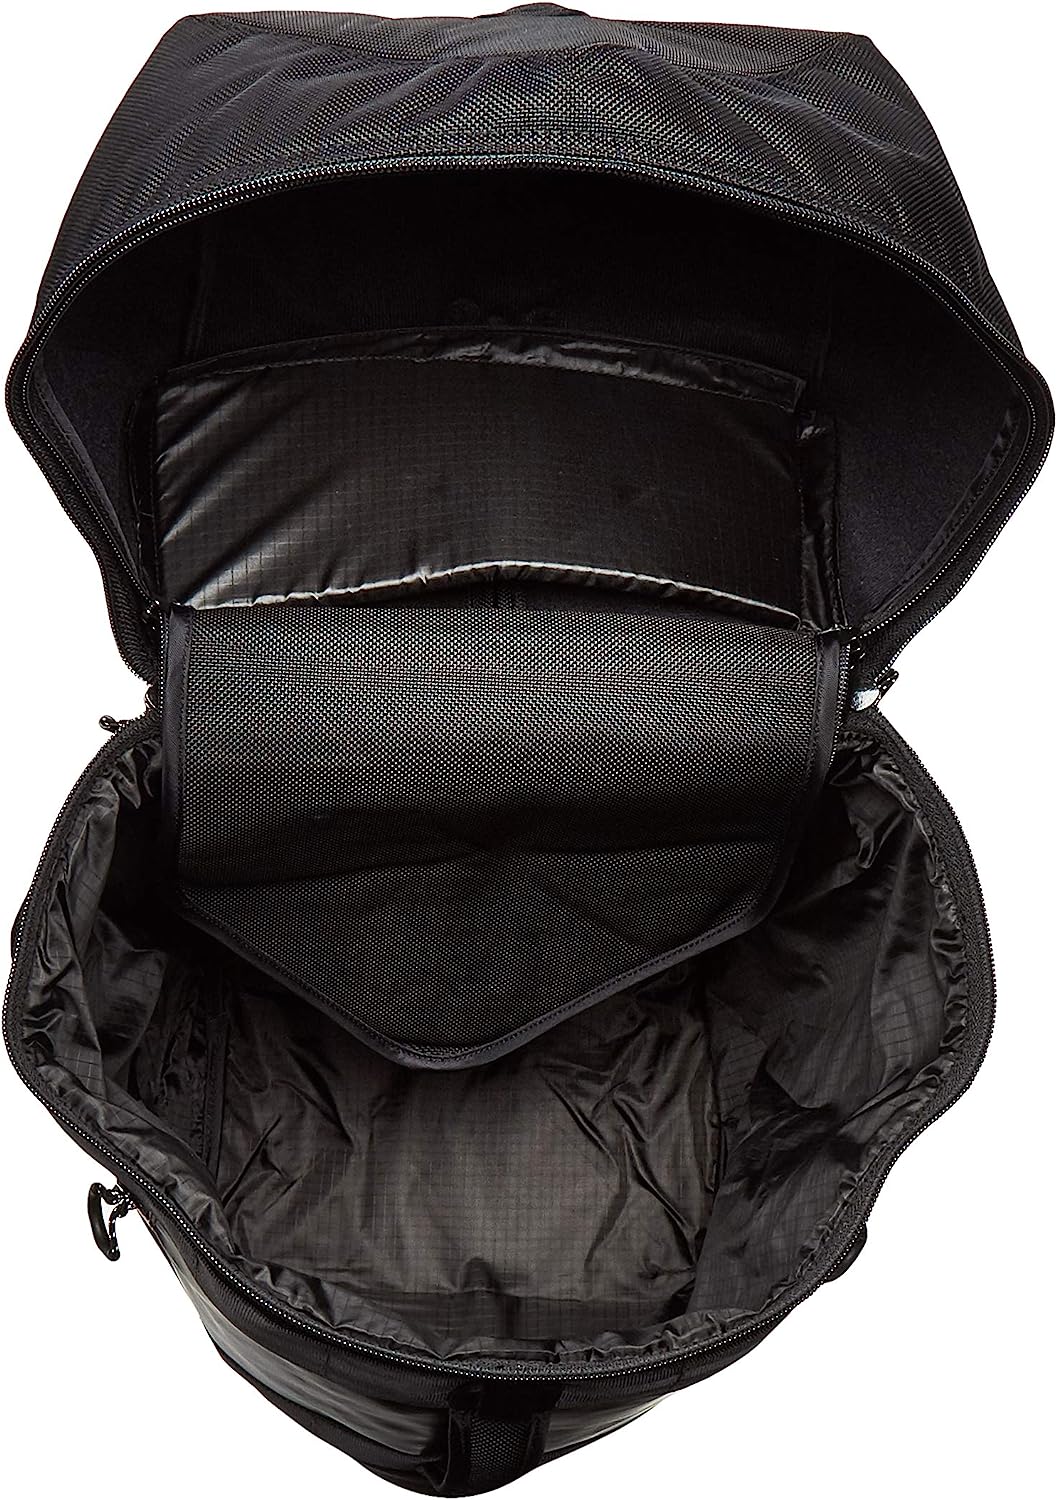 Bose S1 Pro Padded Backpack